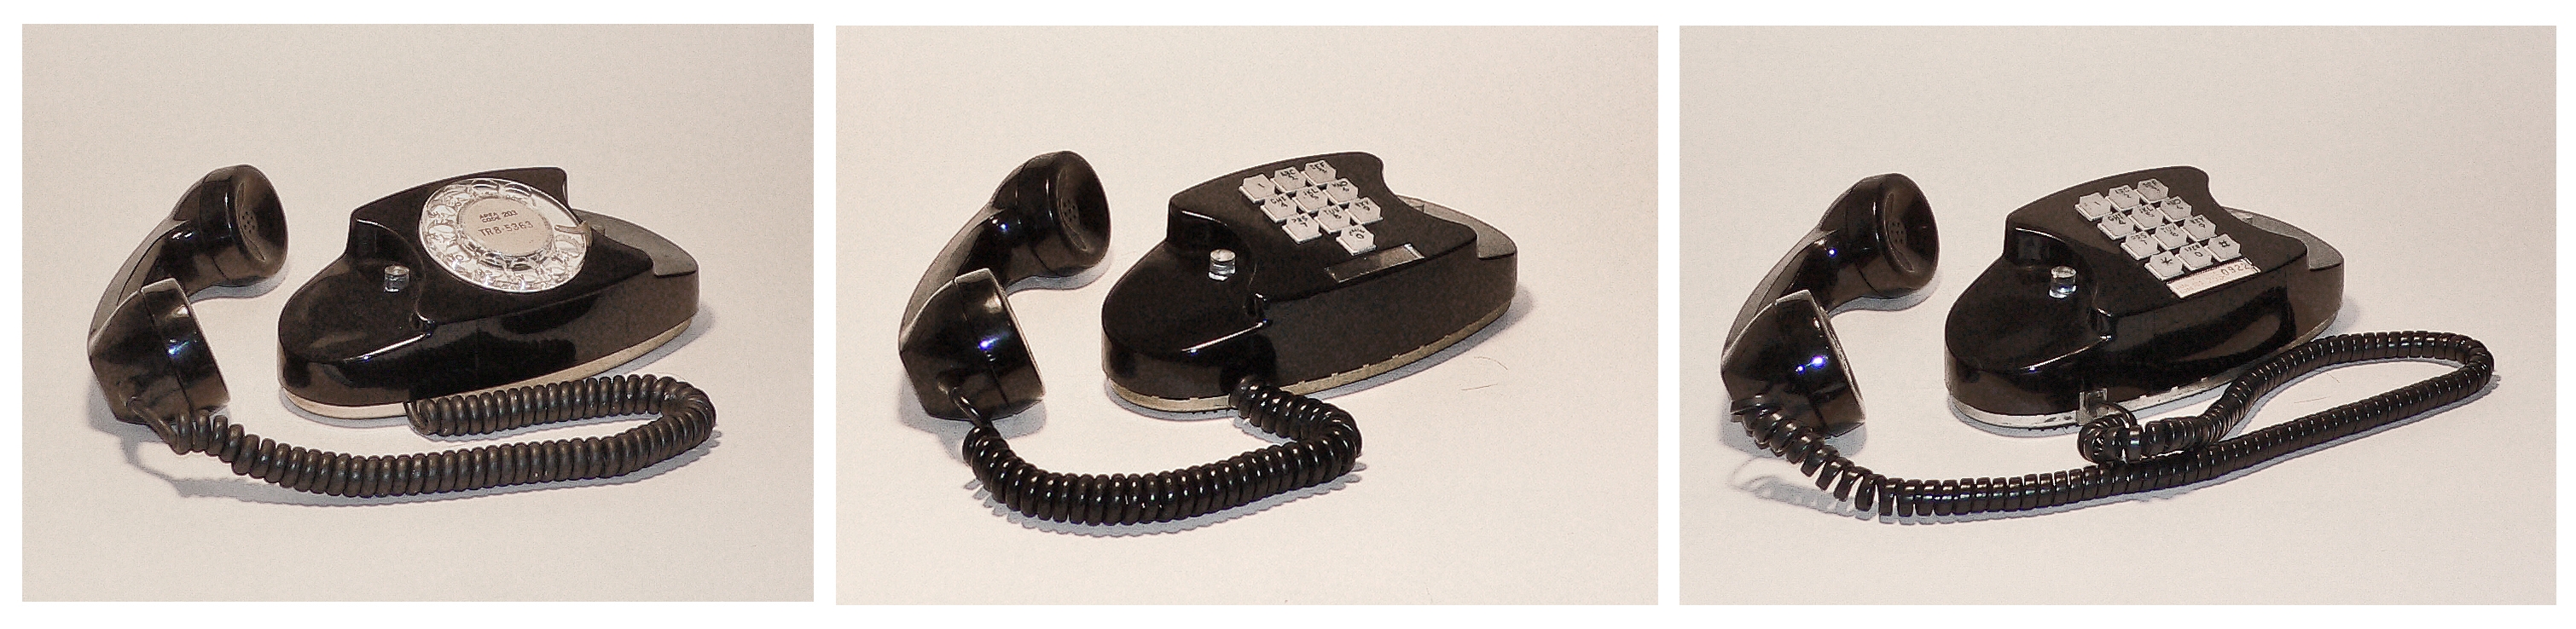 Henry Dreyfuss'a ait telefon tasarımı.